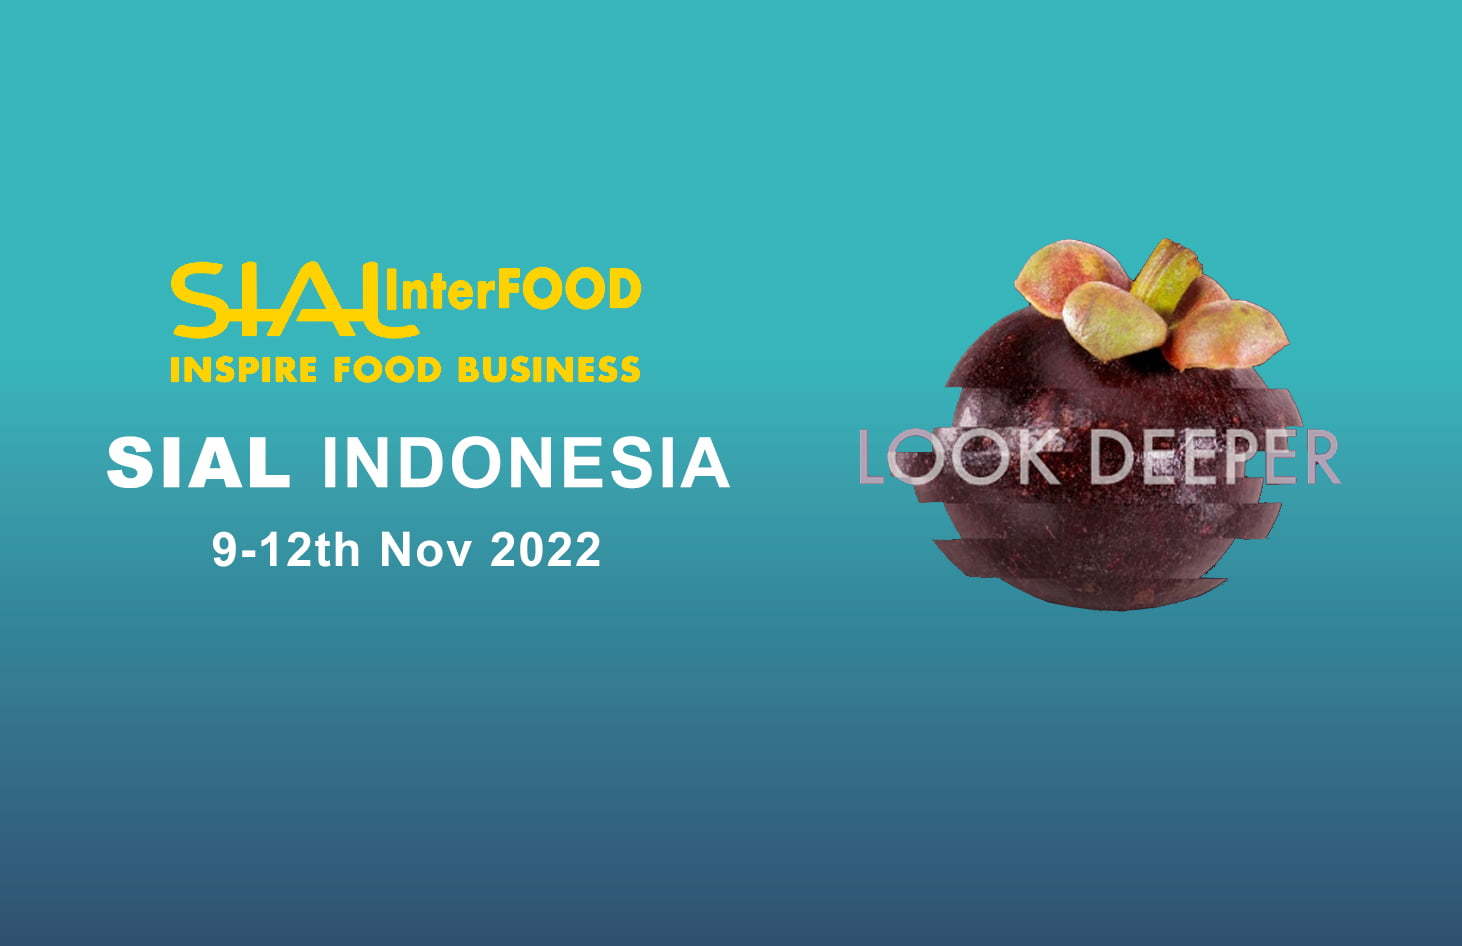 Exhibition Invitation - SIAL InterFood 2022 Indonesia